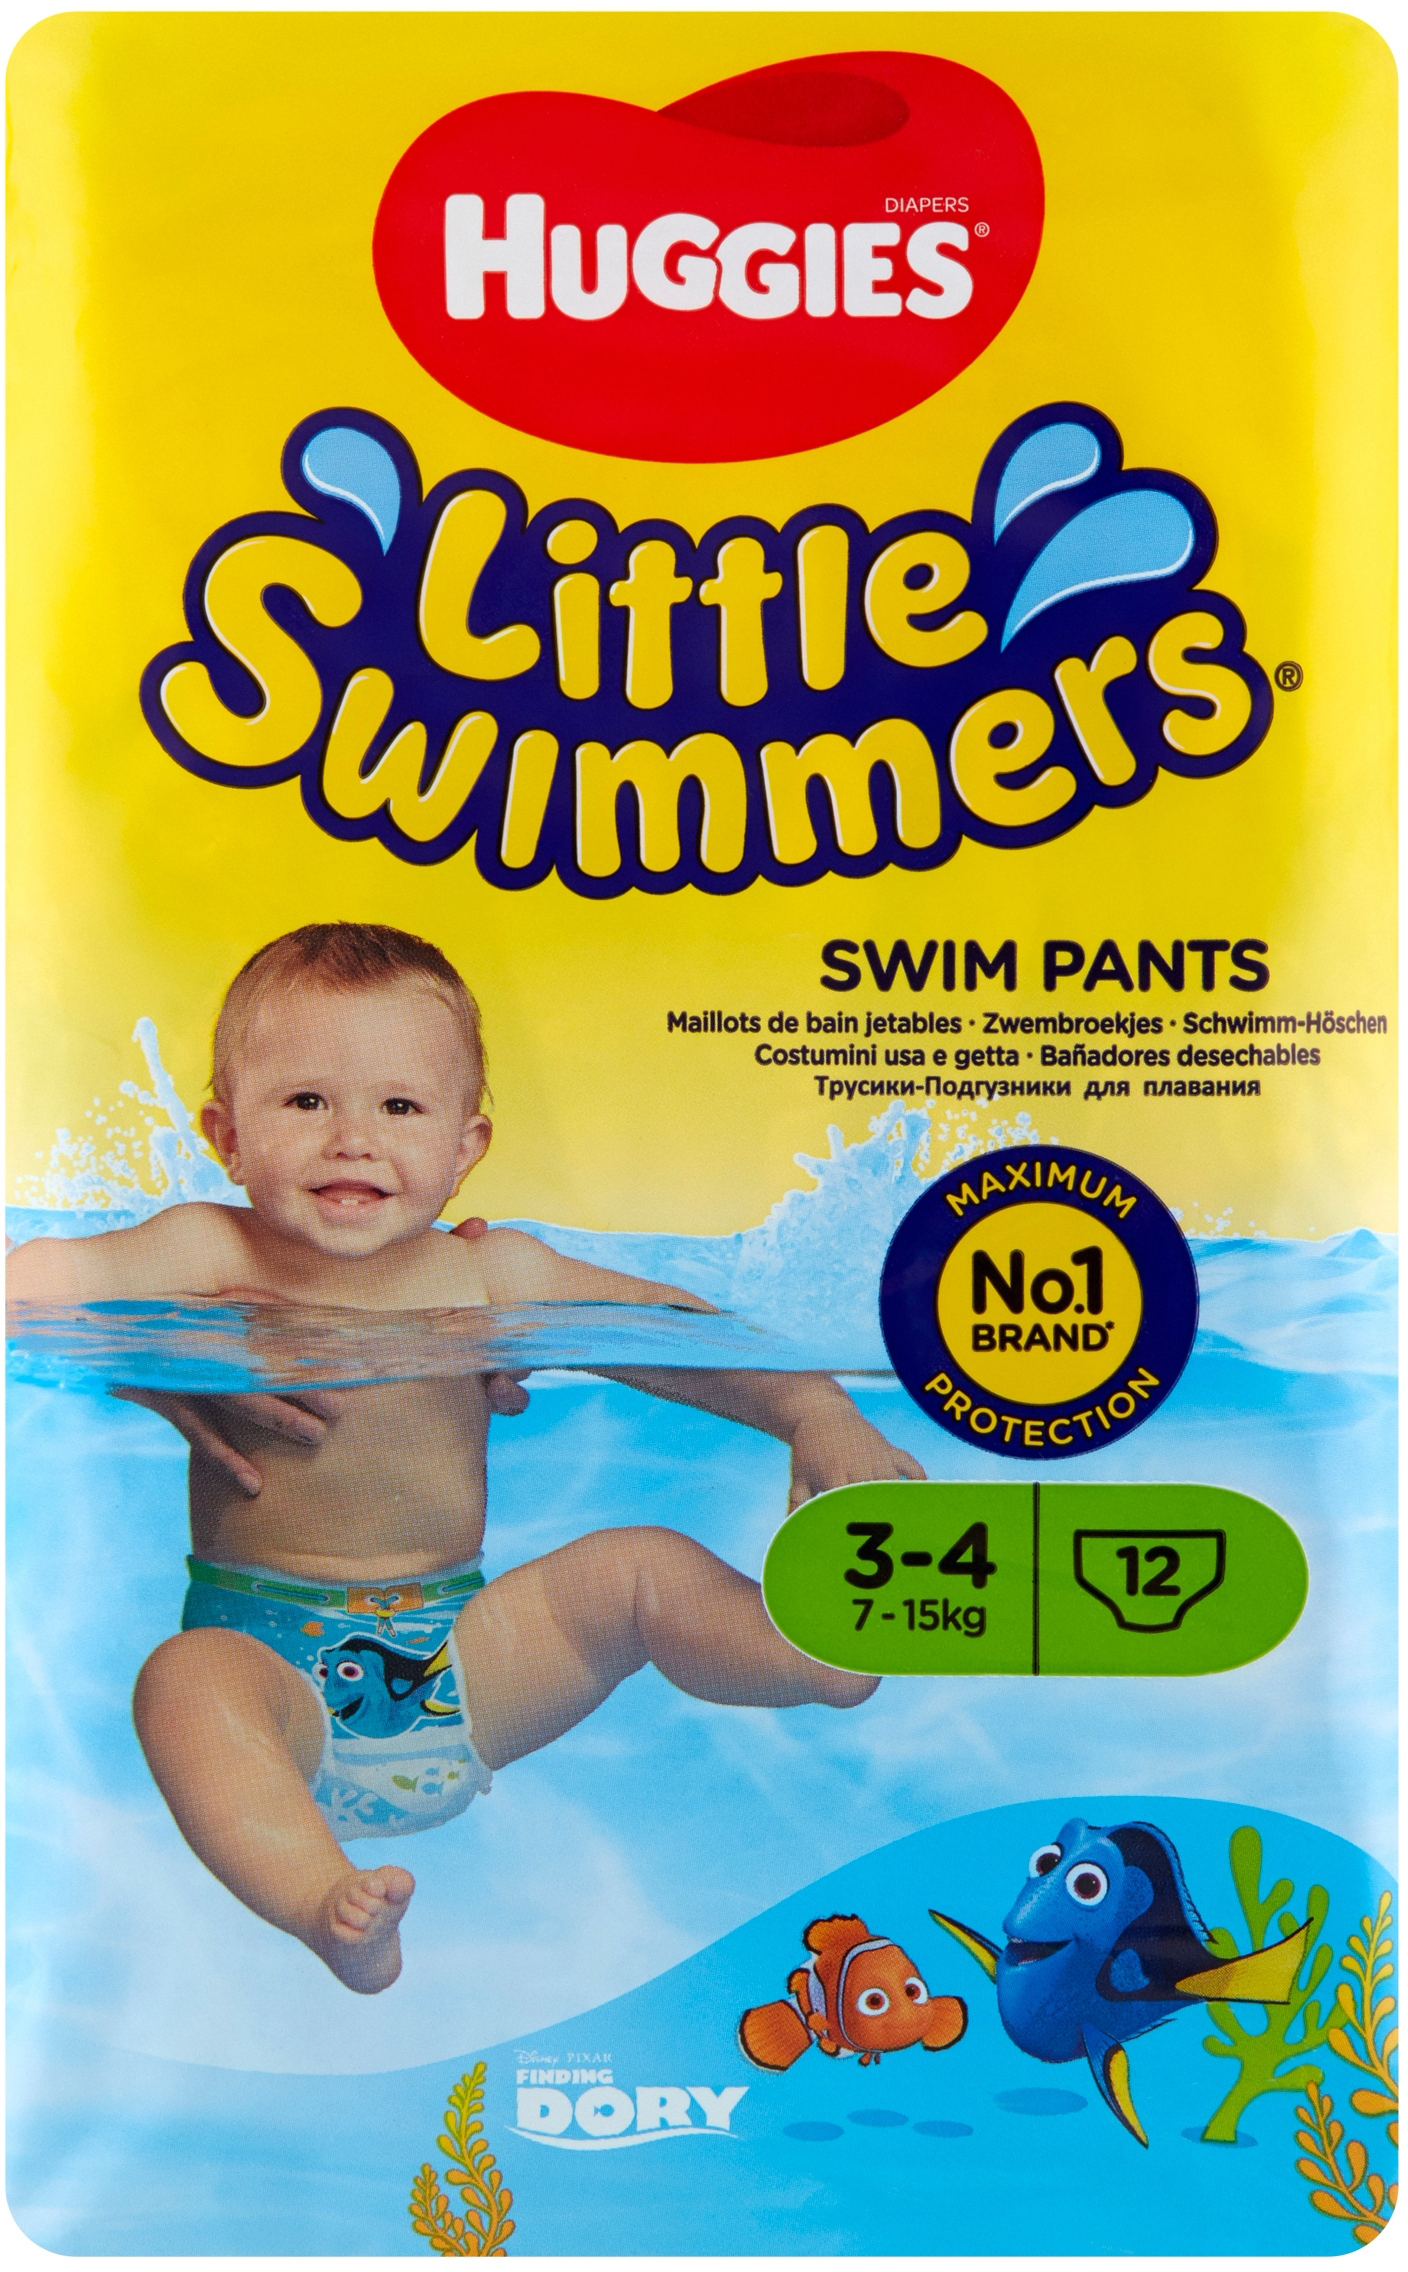 little huggies swimmersopinie